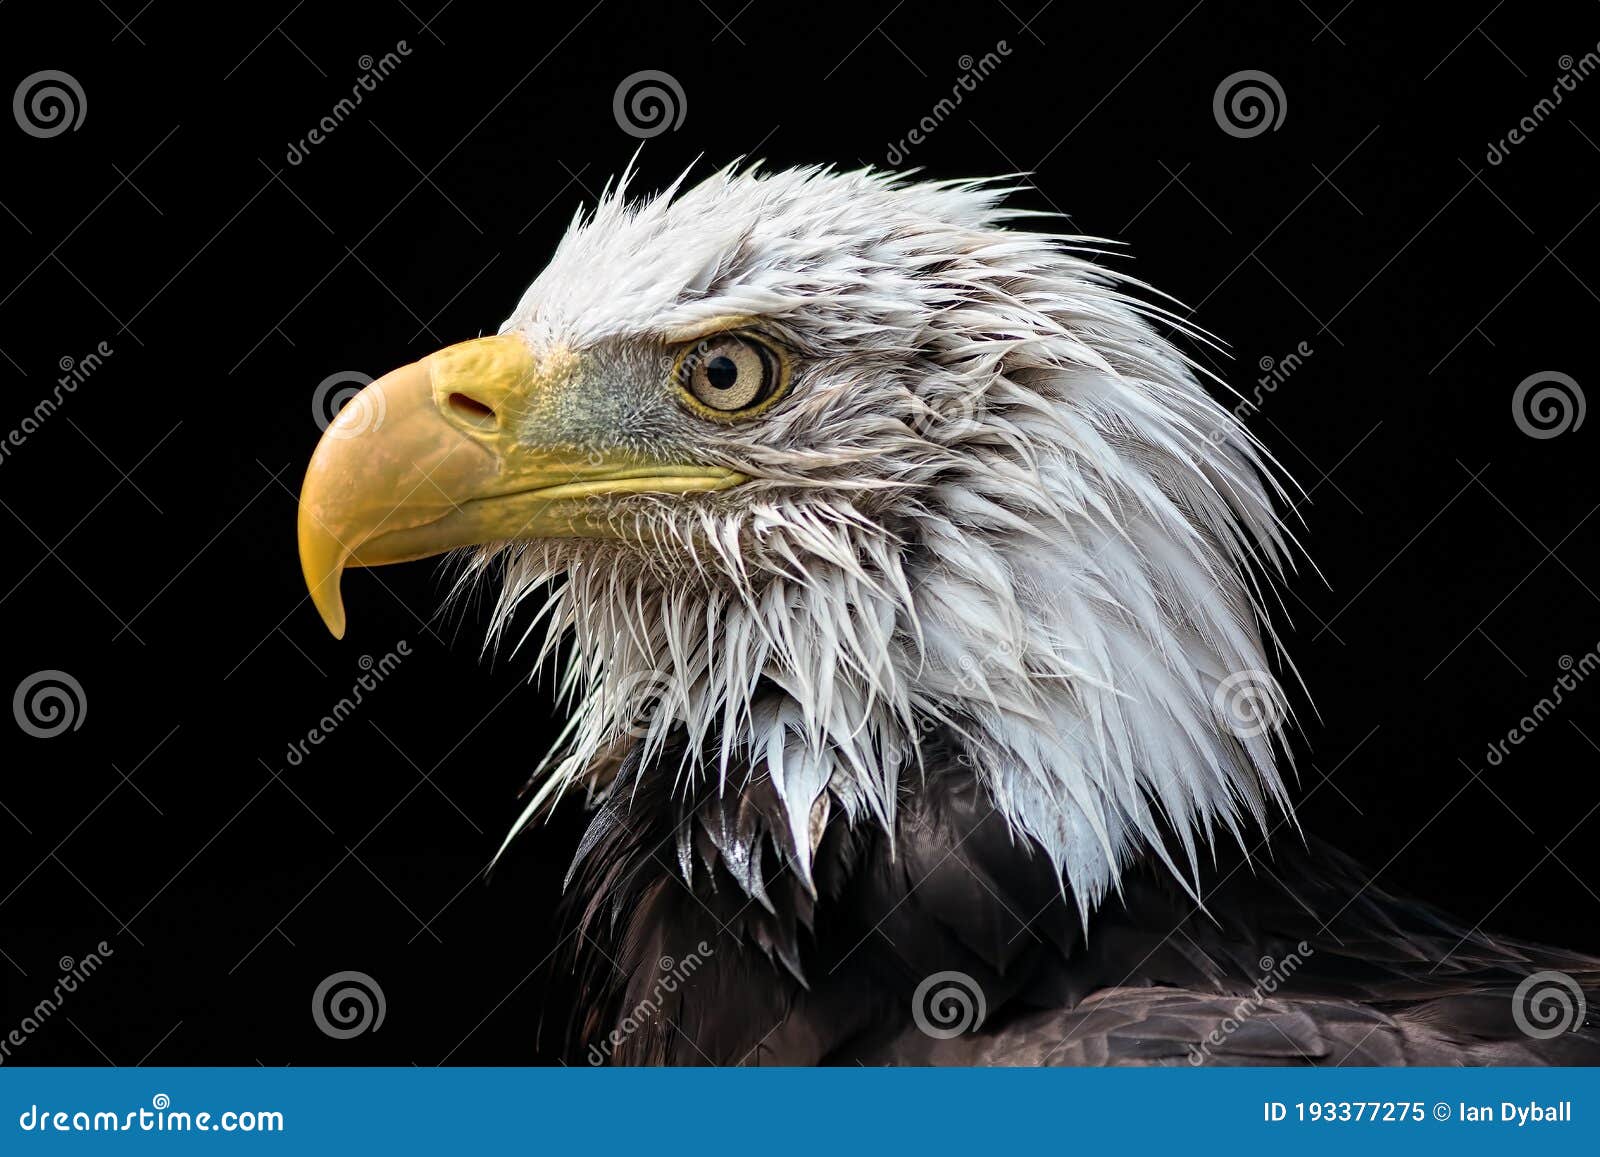 Bald Eagle Head American National Bird Powerful Close Up Portrait